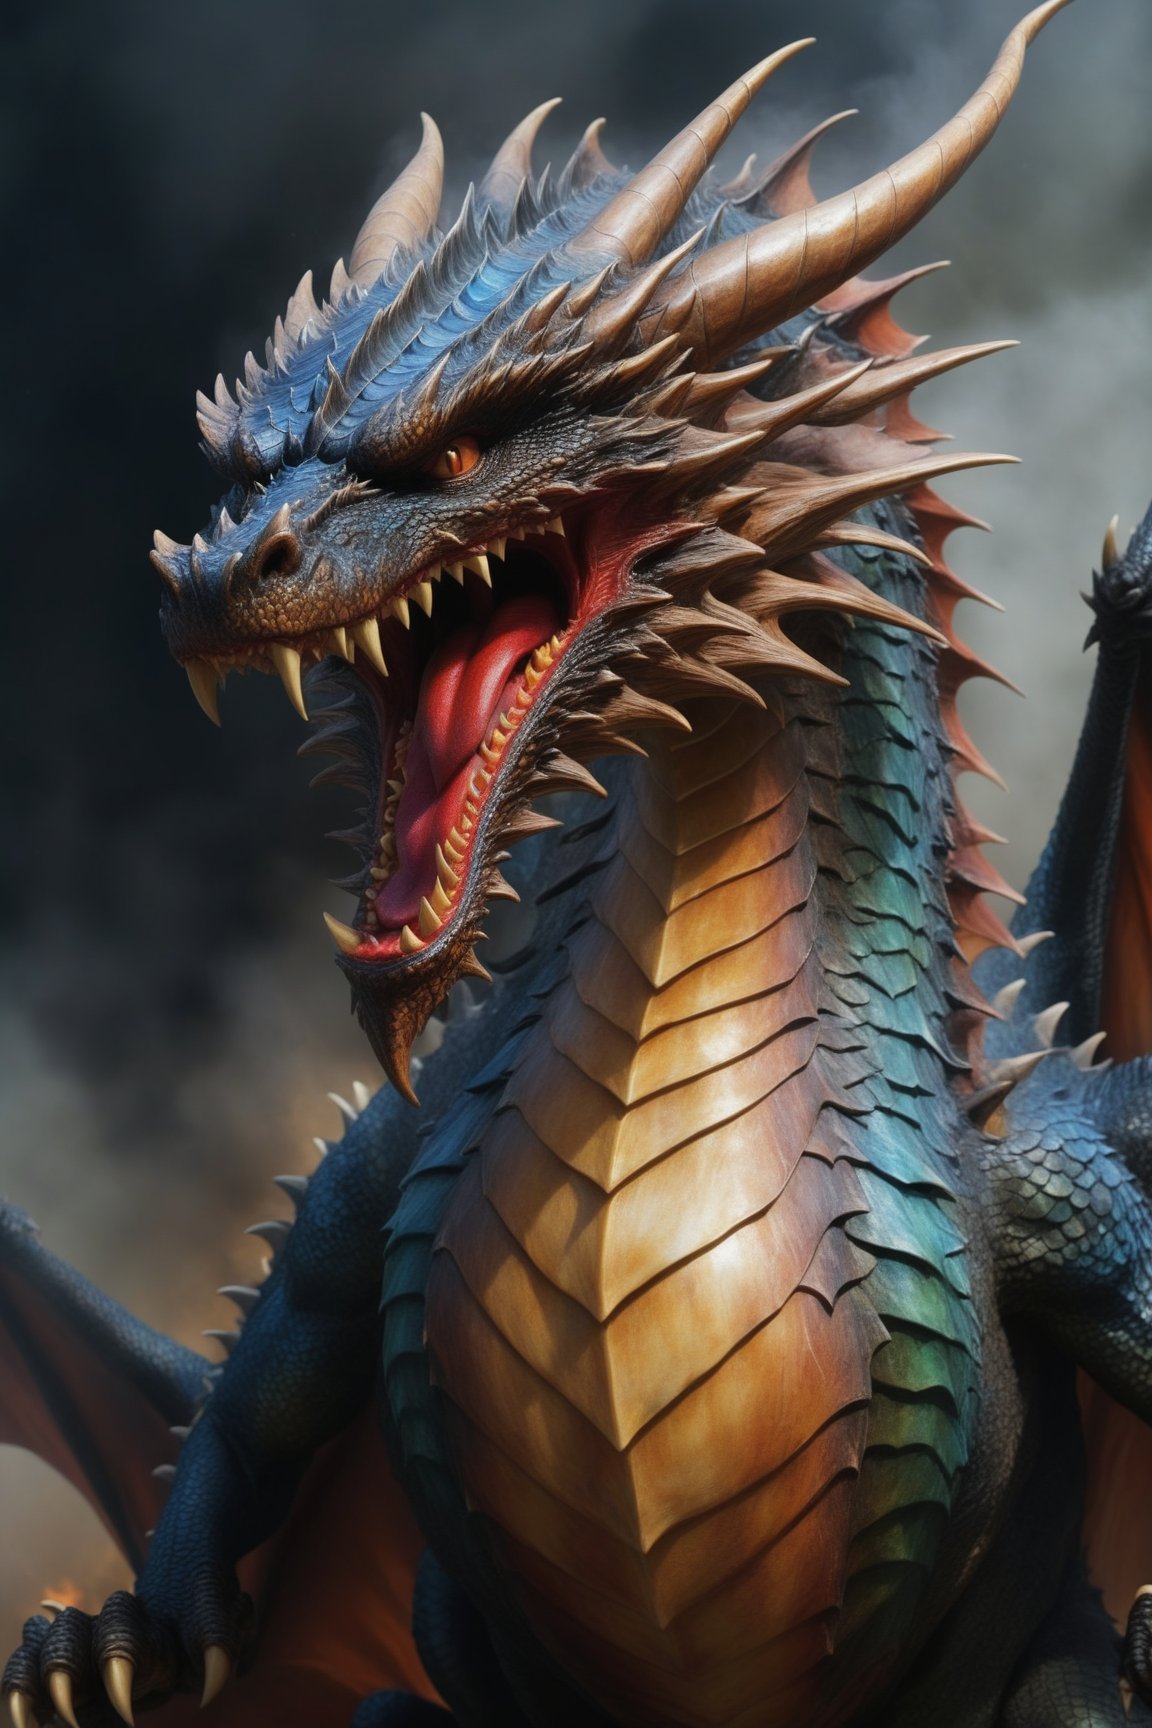 Angry fierce dragon,,darkart,,,DonMn1ghtm4reXL,,skpleonardostyle,